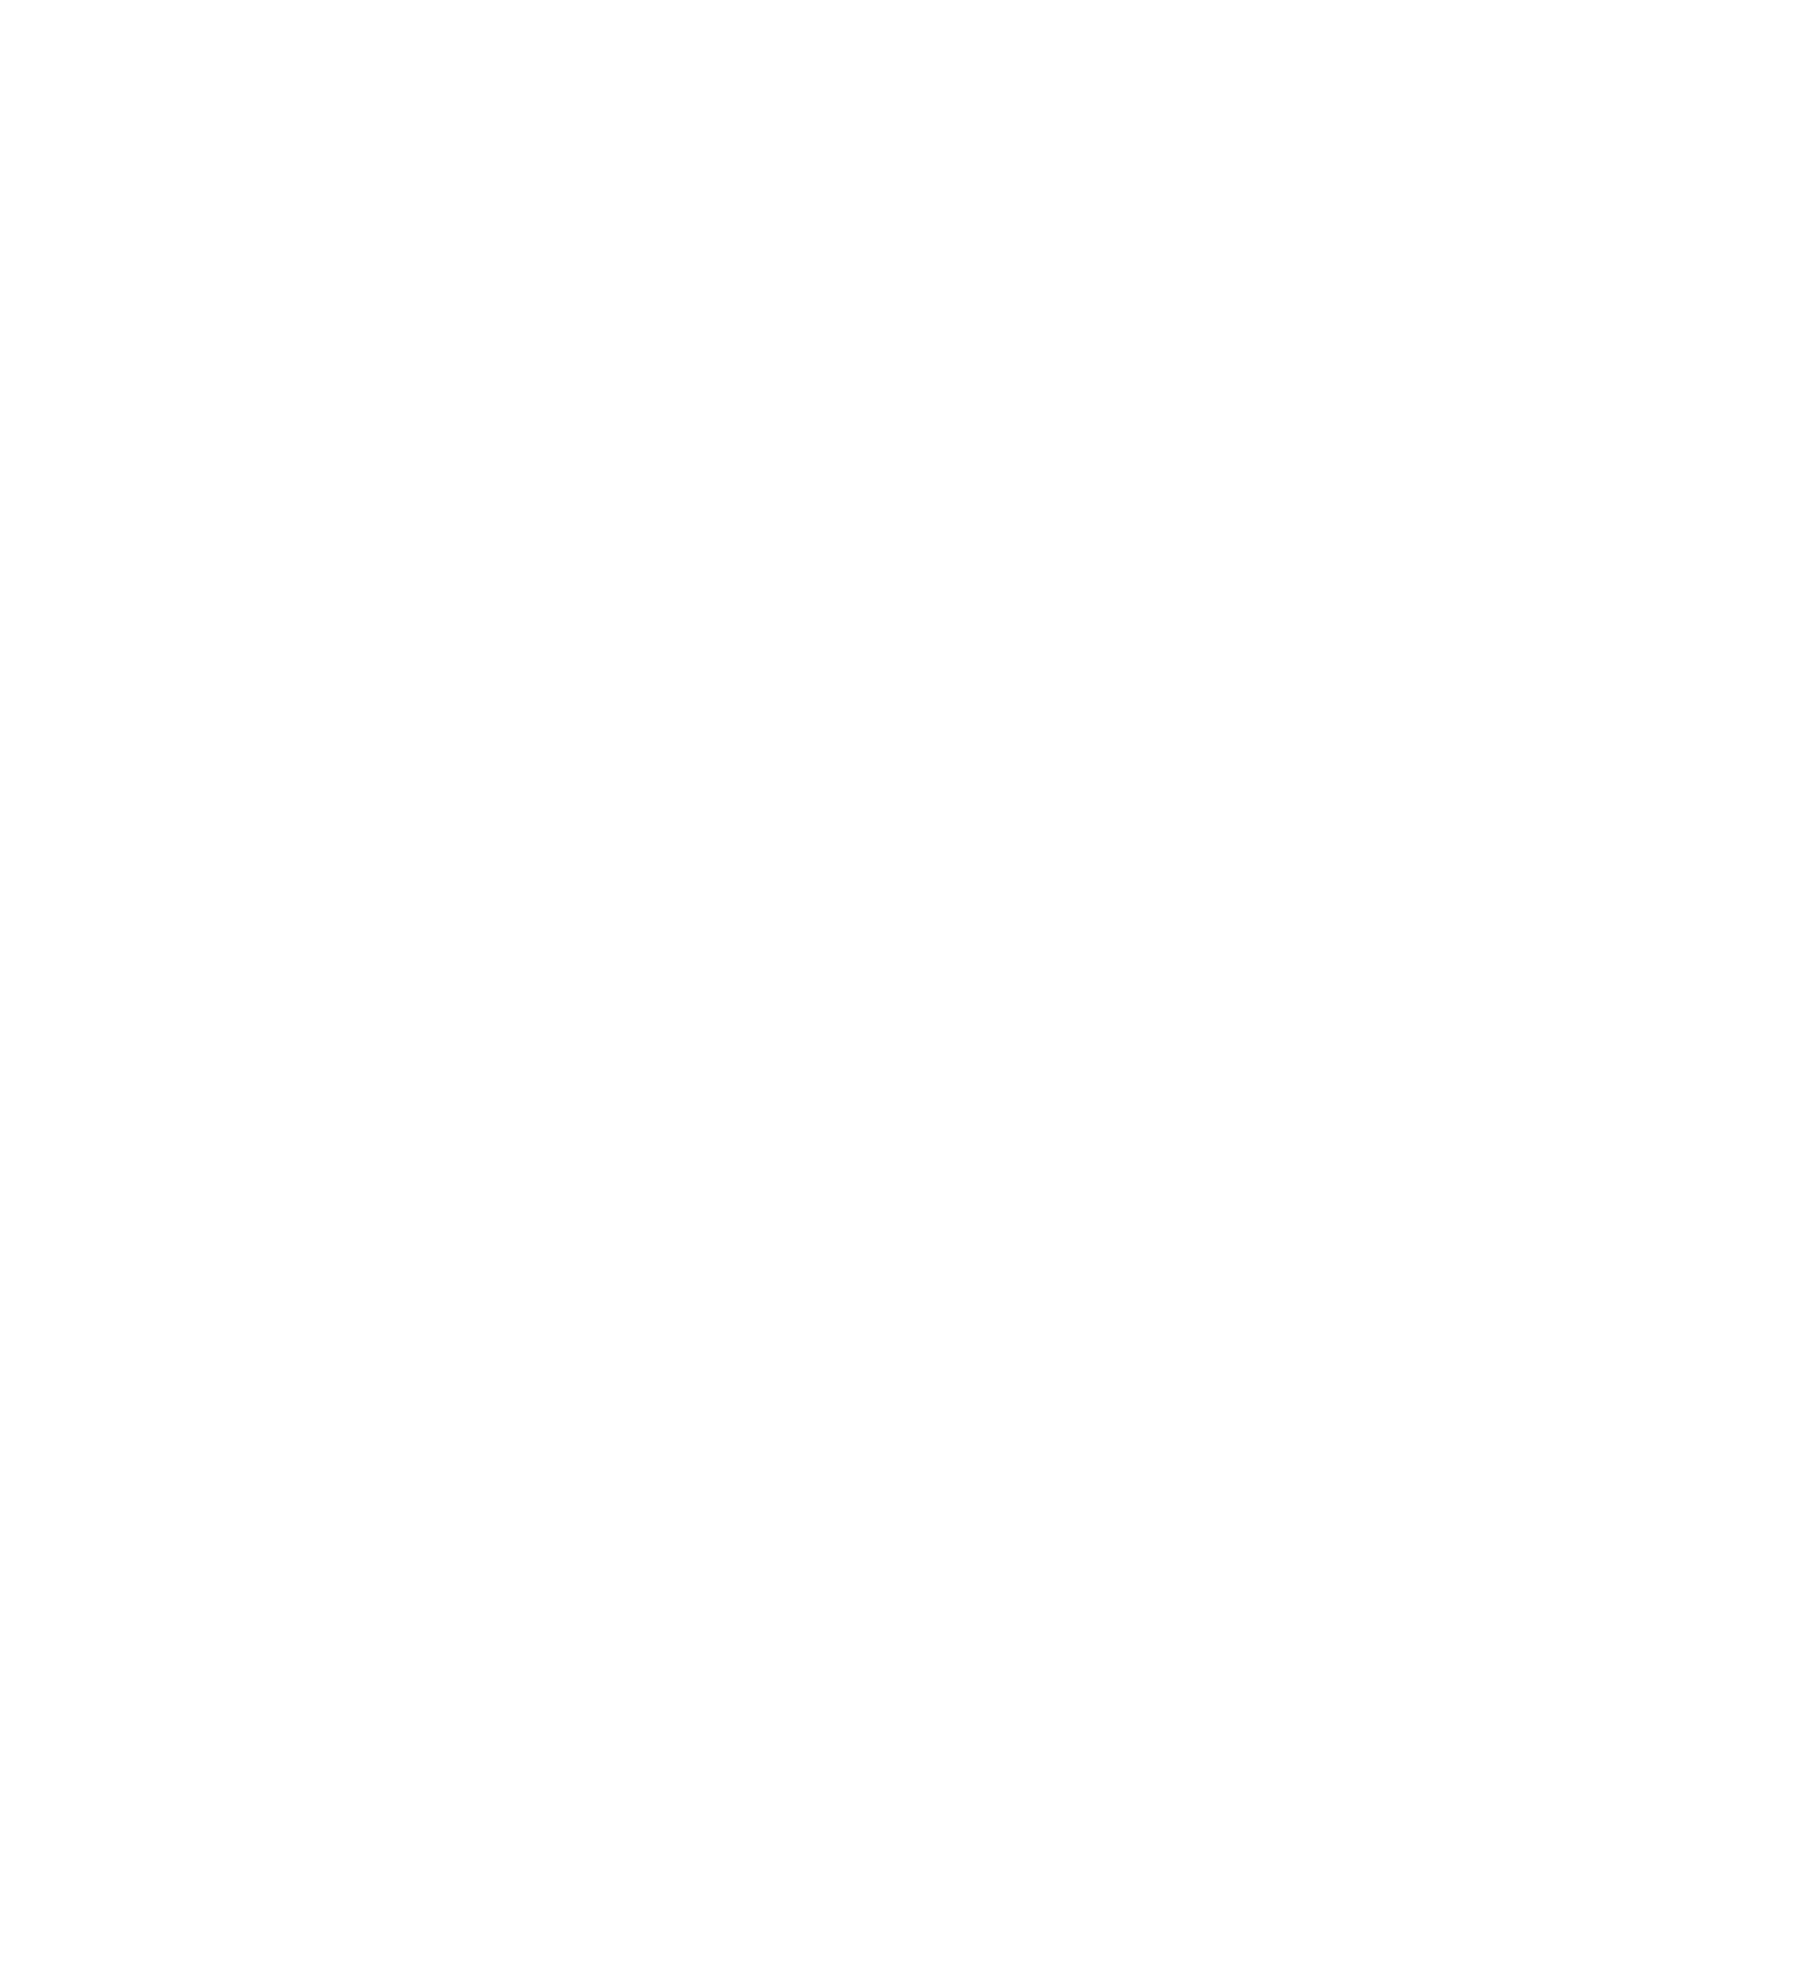 Culture Desert Records